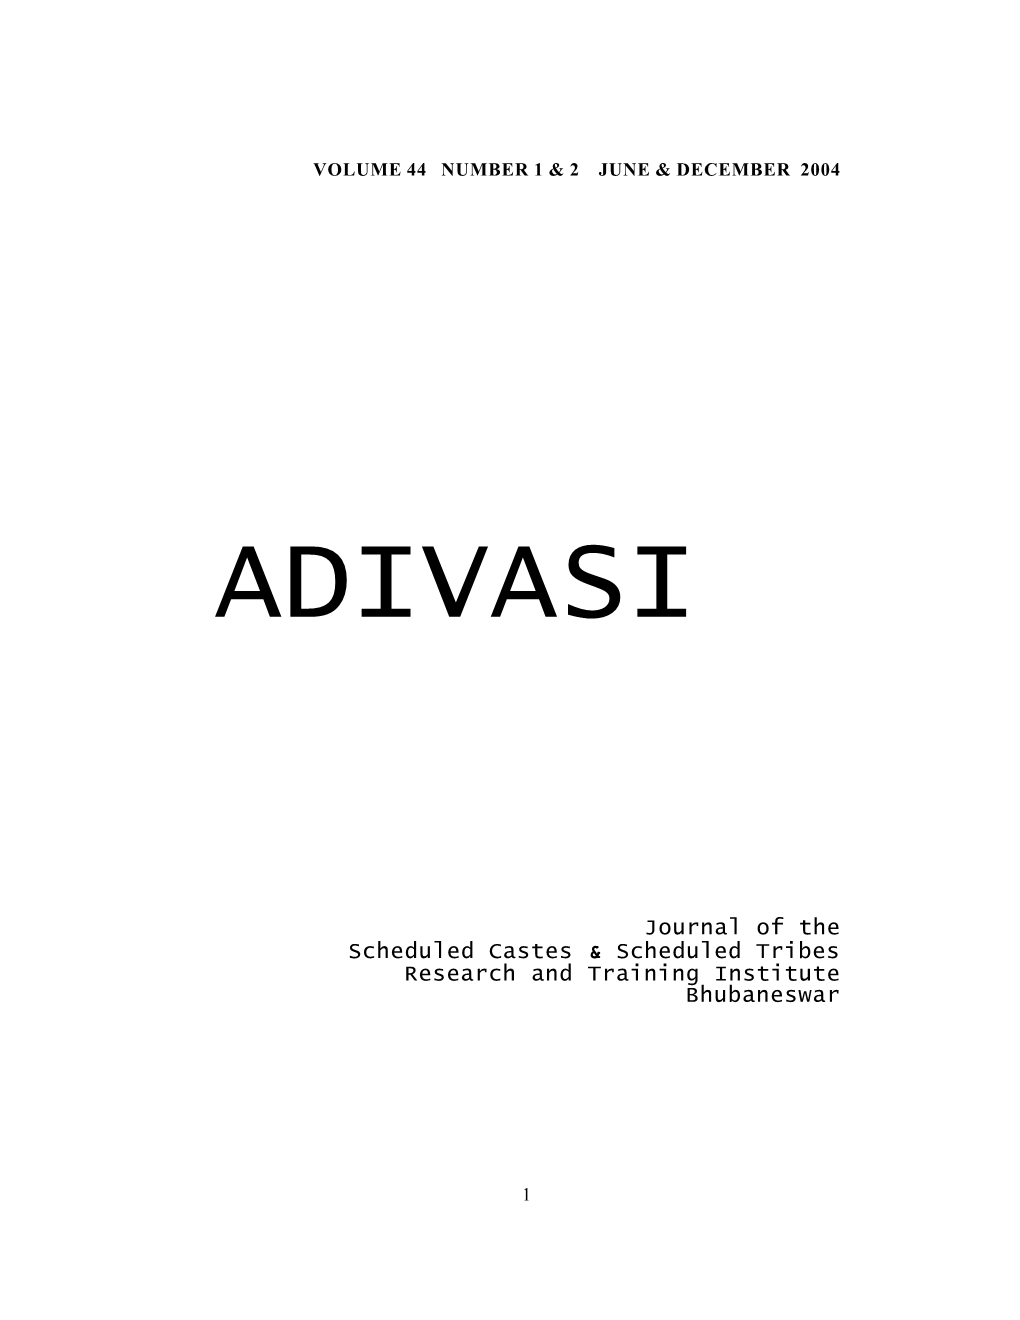 ADIVASI Journal Vol.-44, No.1 & 2, 2004